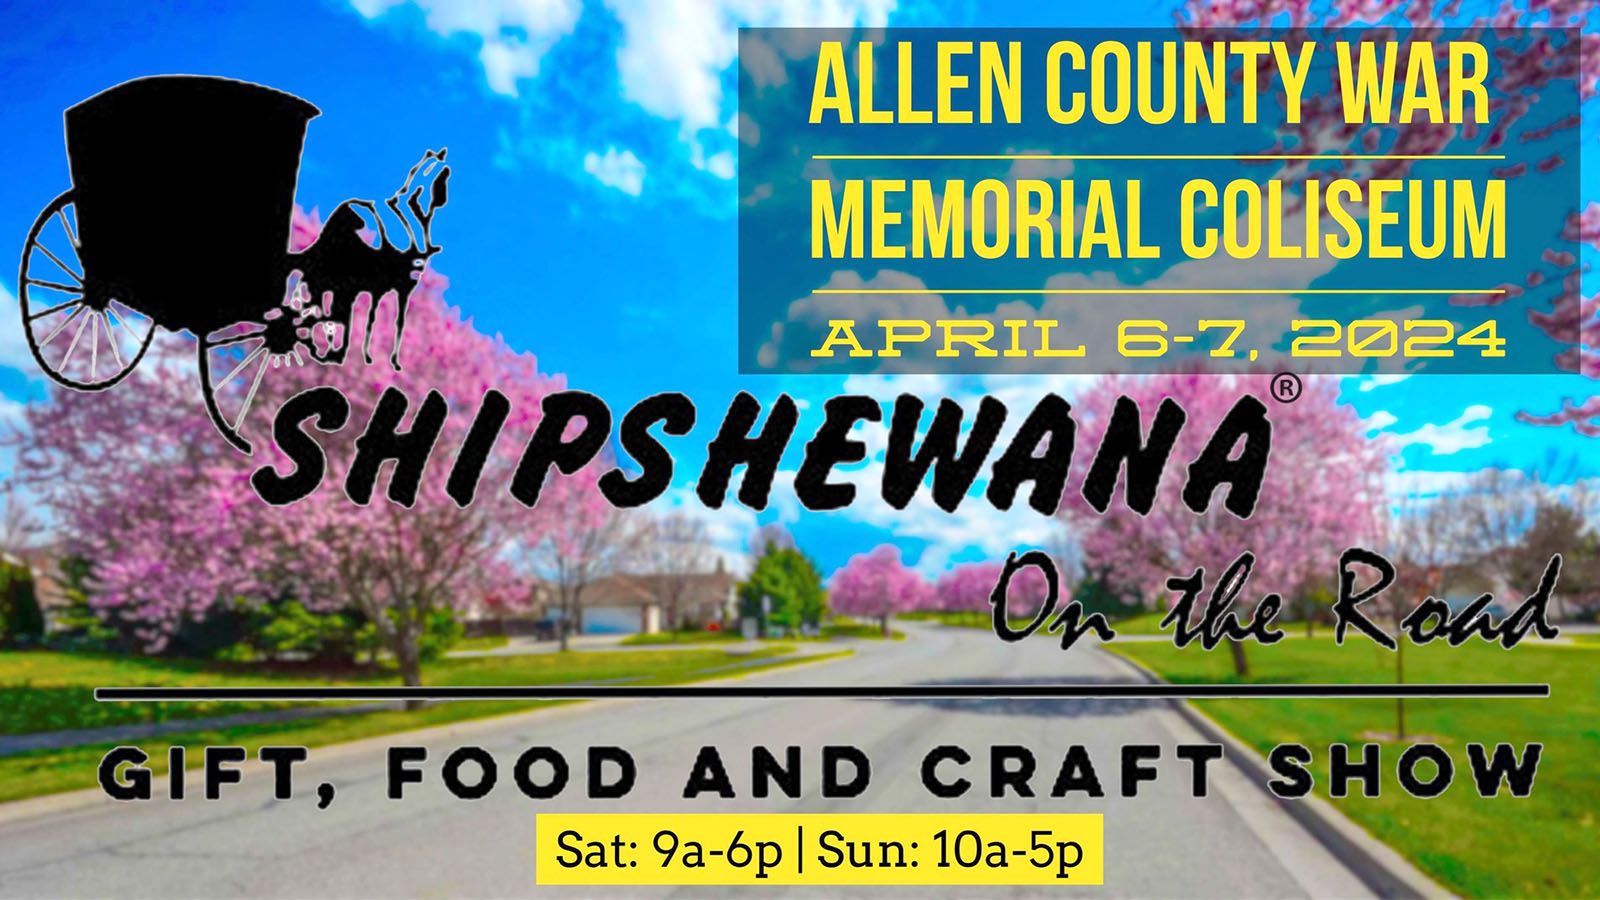 Shipshewana on the Road returns to Memorial Coliseum, April 6-7.